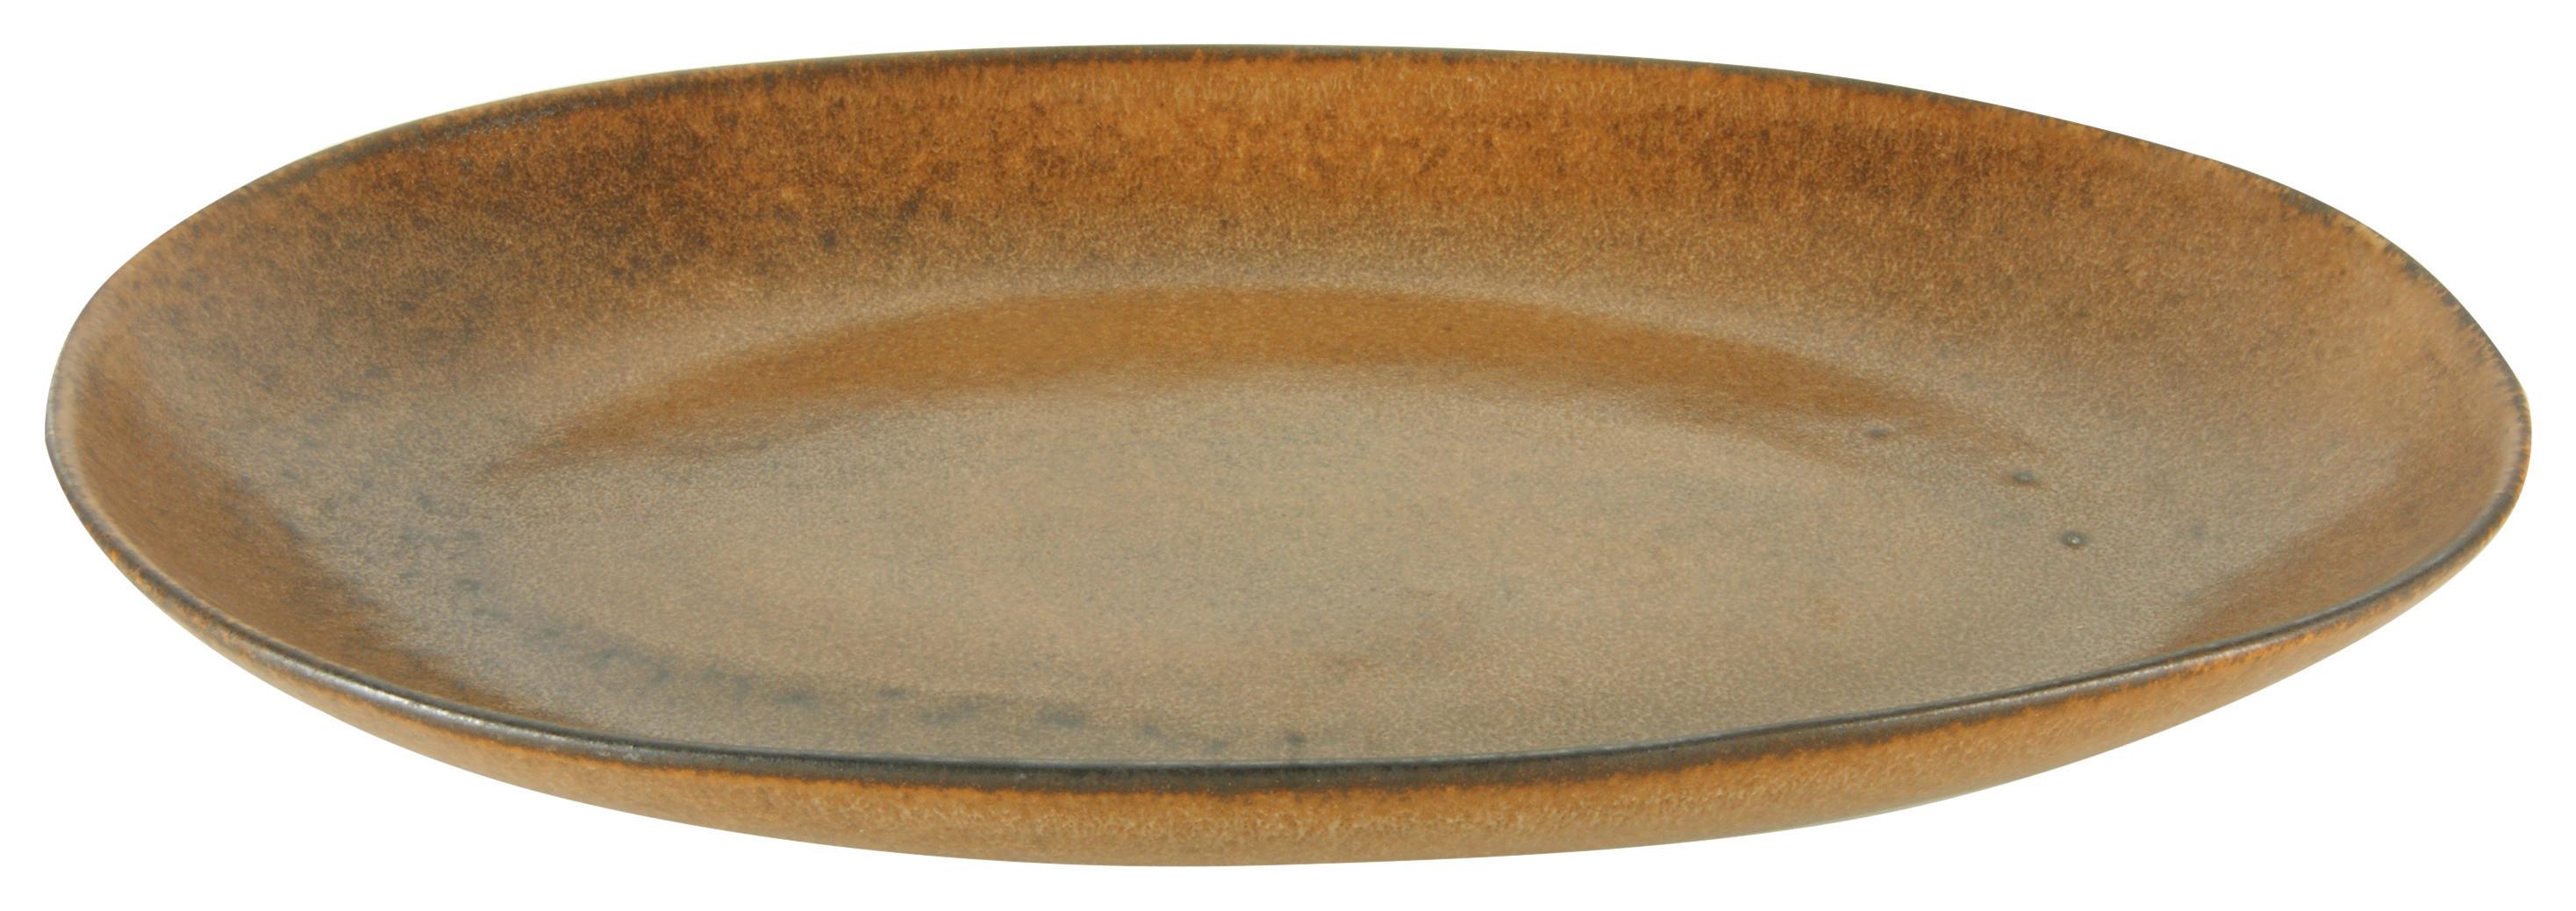 Platzteller Sahara aus Keramik Ø ca. 36cm - Braun, LIFESTYLE, Keramik (36/22/4,5cm) - Zandiara